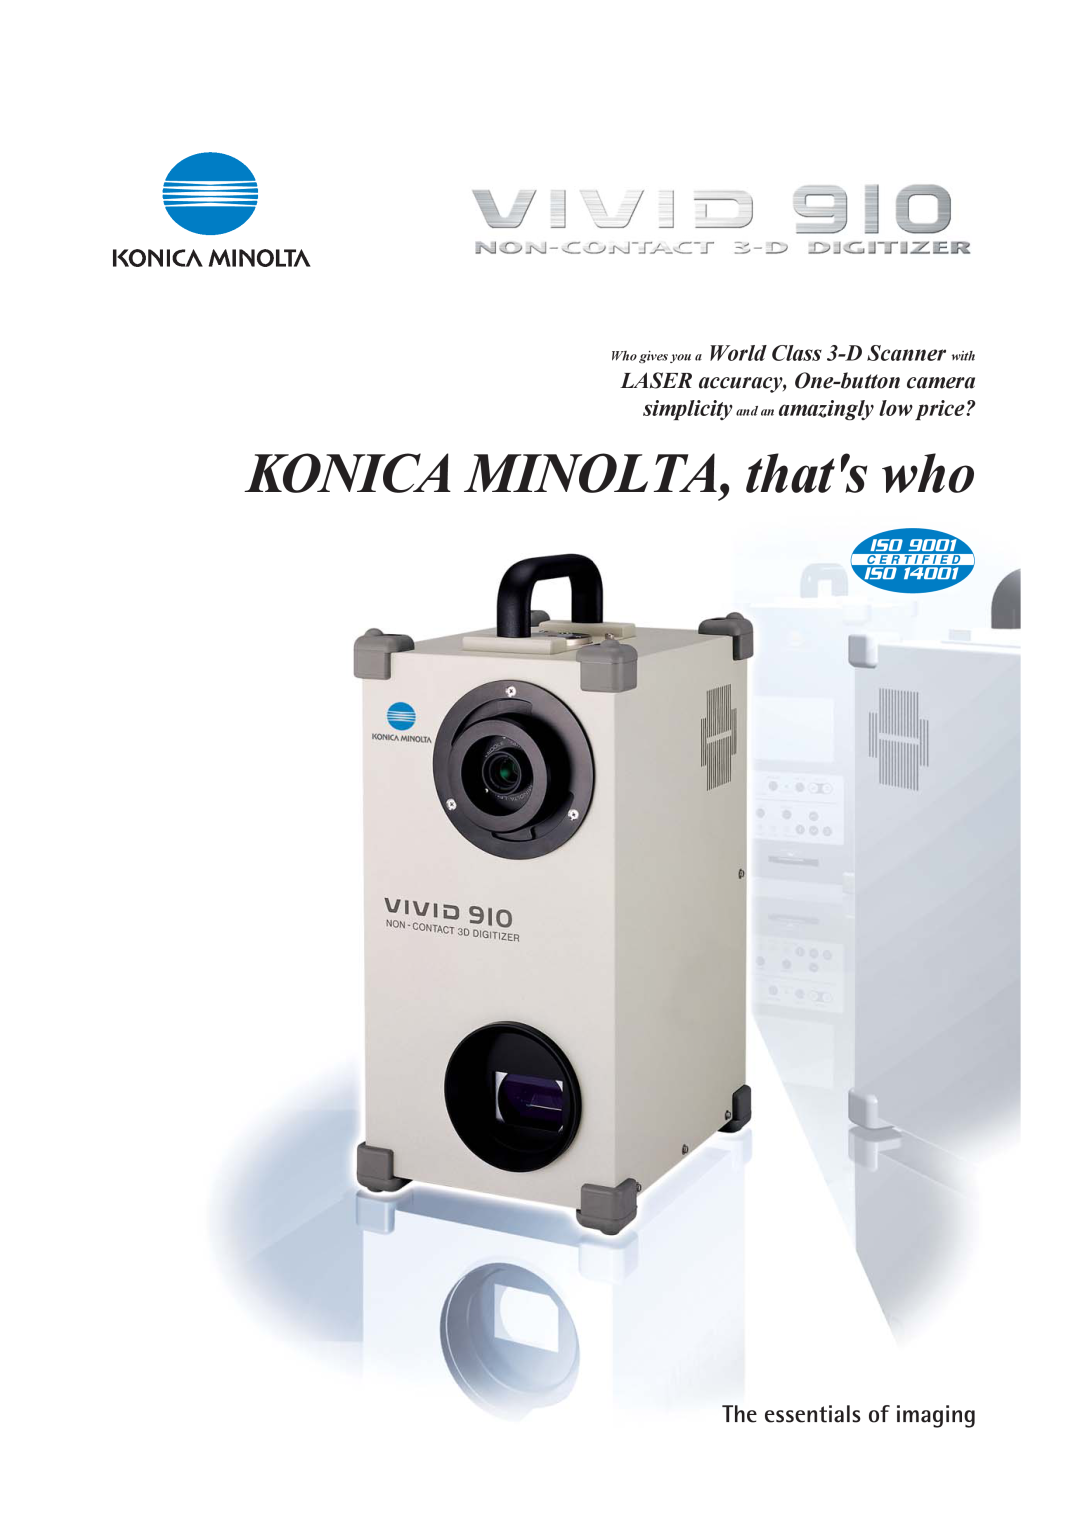 Konica Minolta 3-D Scanner manual KONICA MINOLTA, thats who 